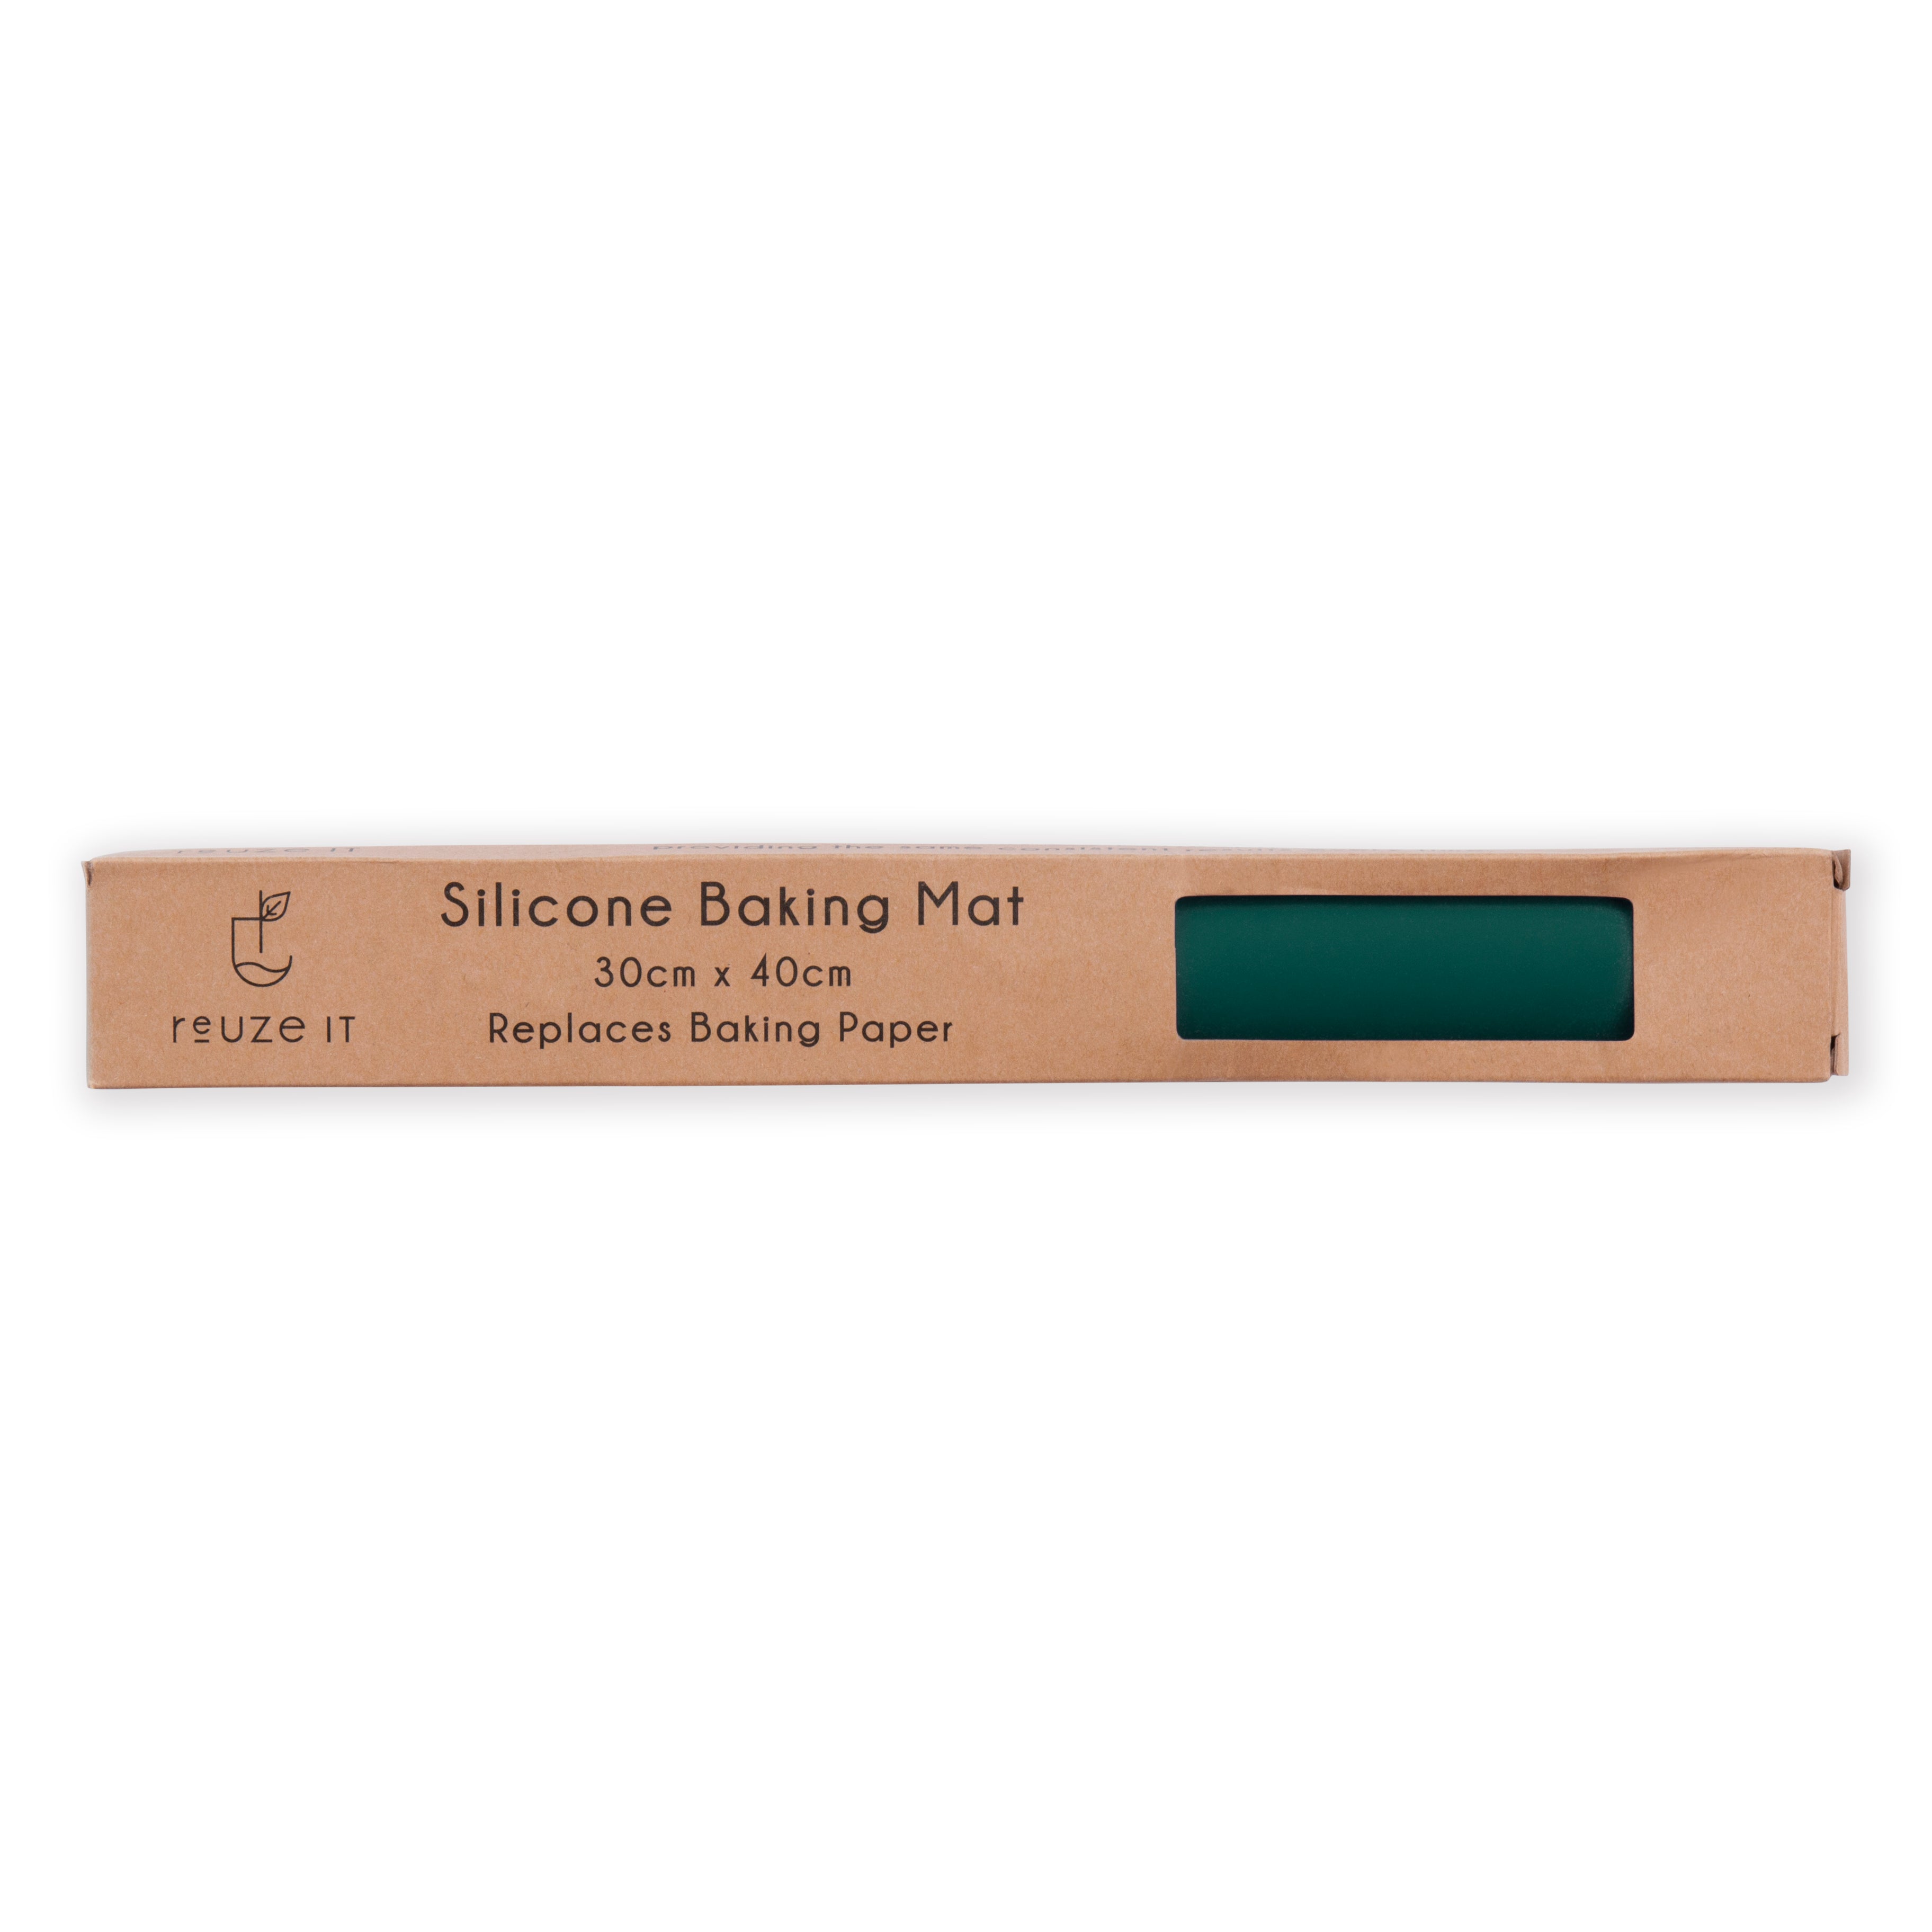 Silicone Baking Mat | Baking | Reuze It | Eco Store | Eco Friendly Products